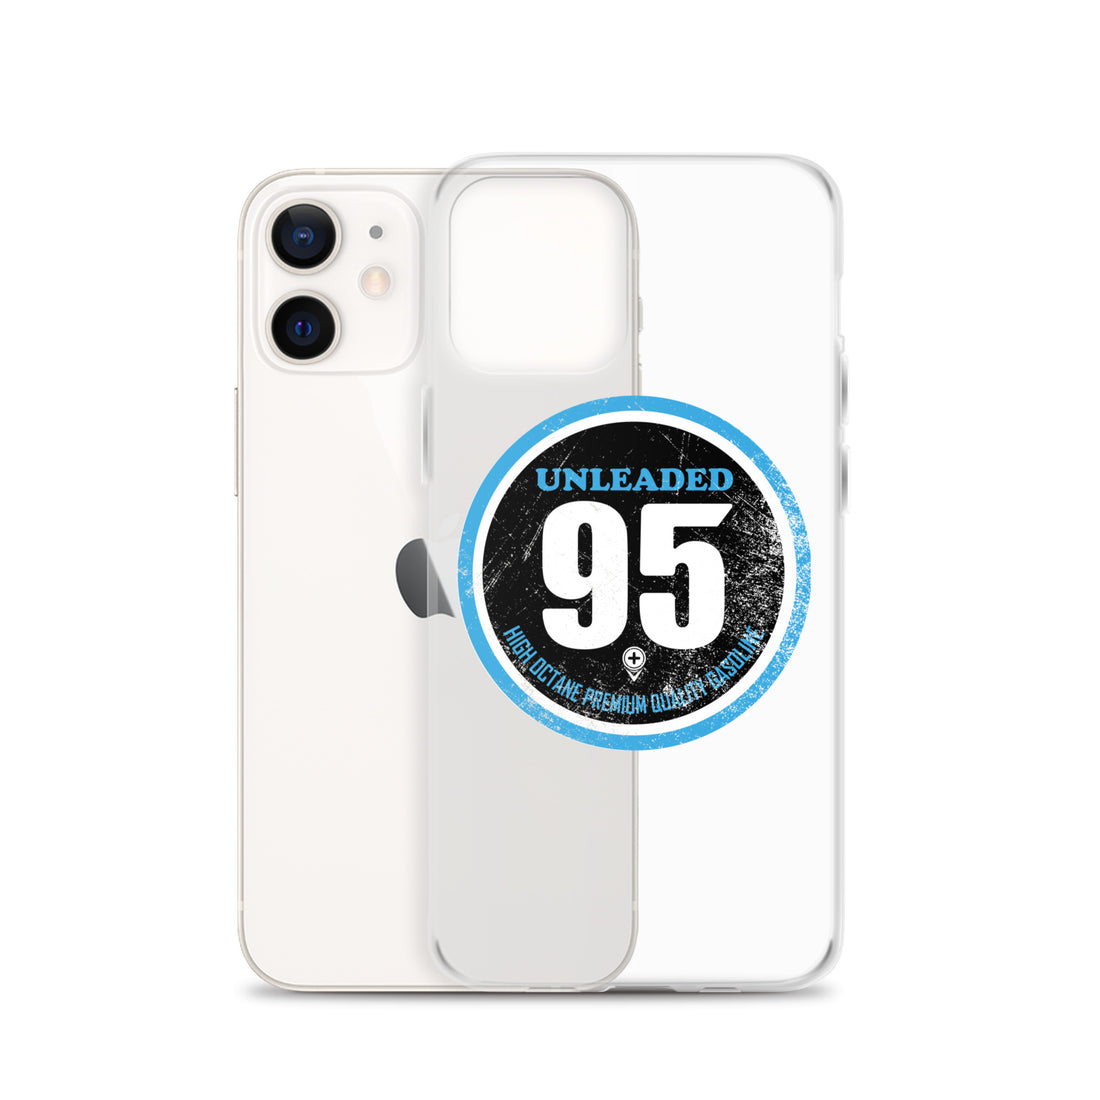 UNLEADED 95 iPhone Case